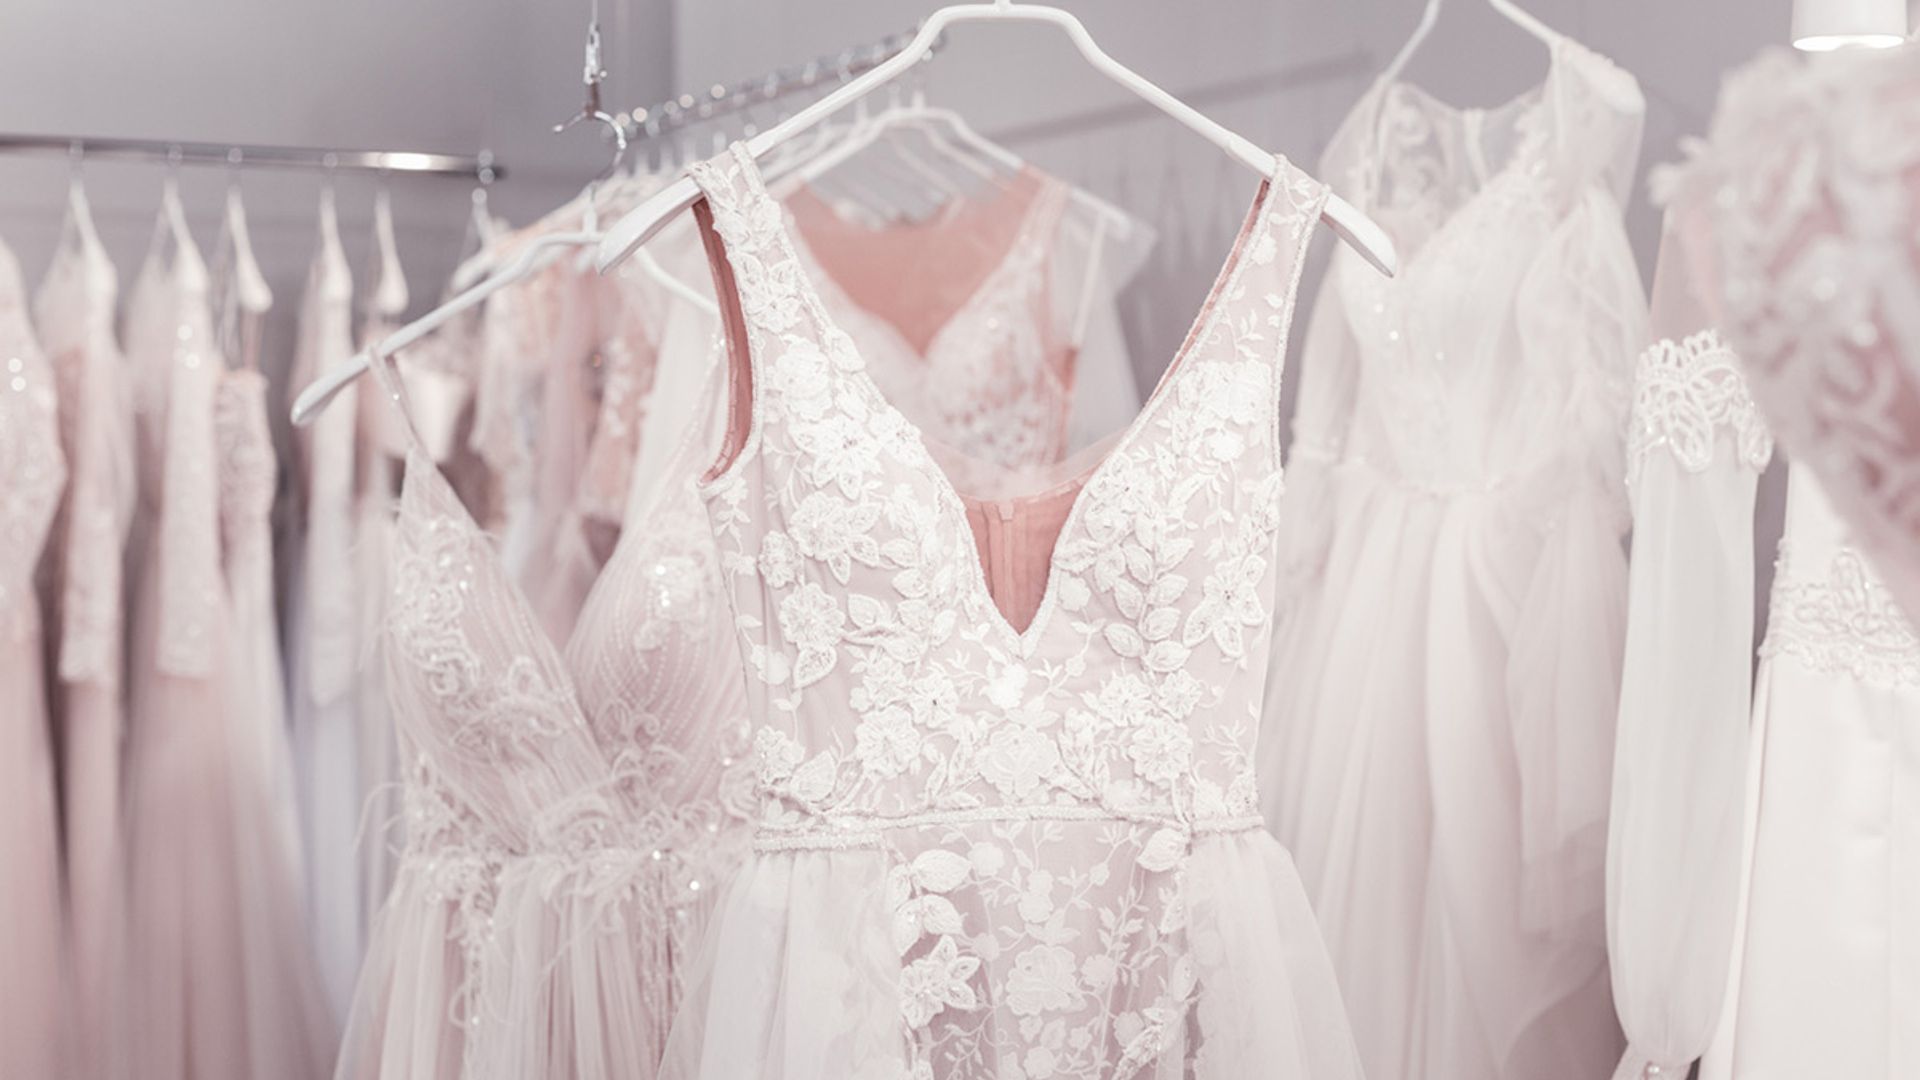 Best Wedding Dresses To Buy During The Coronavirus Lockdown 7 Amazing Online Styles Hello